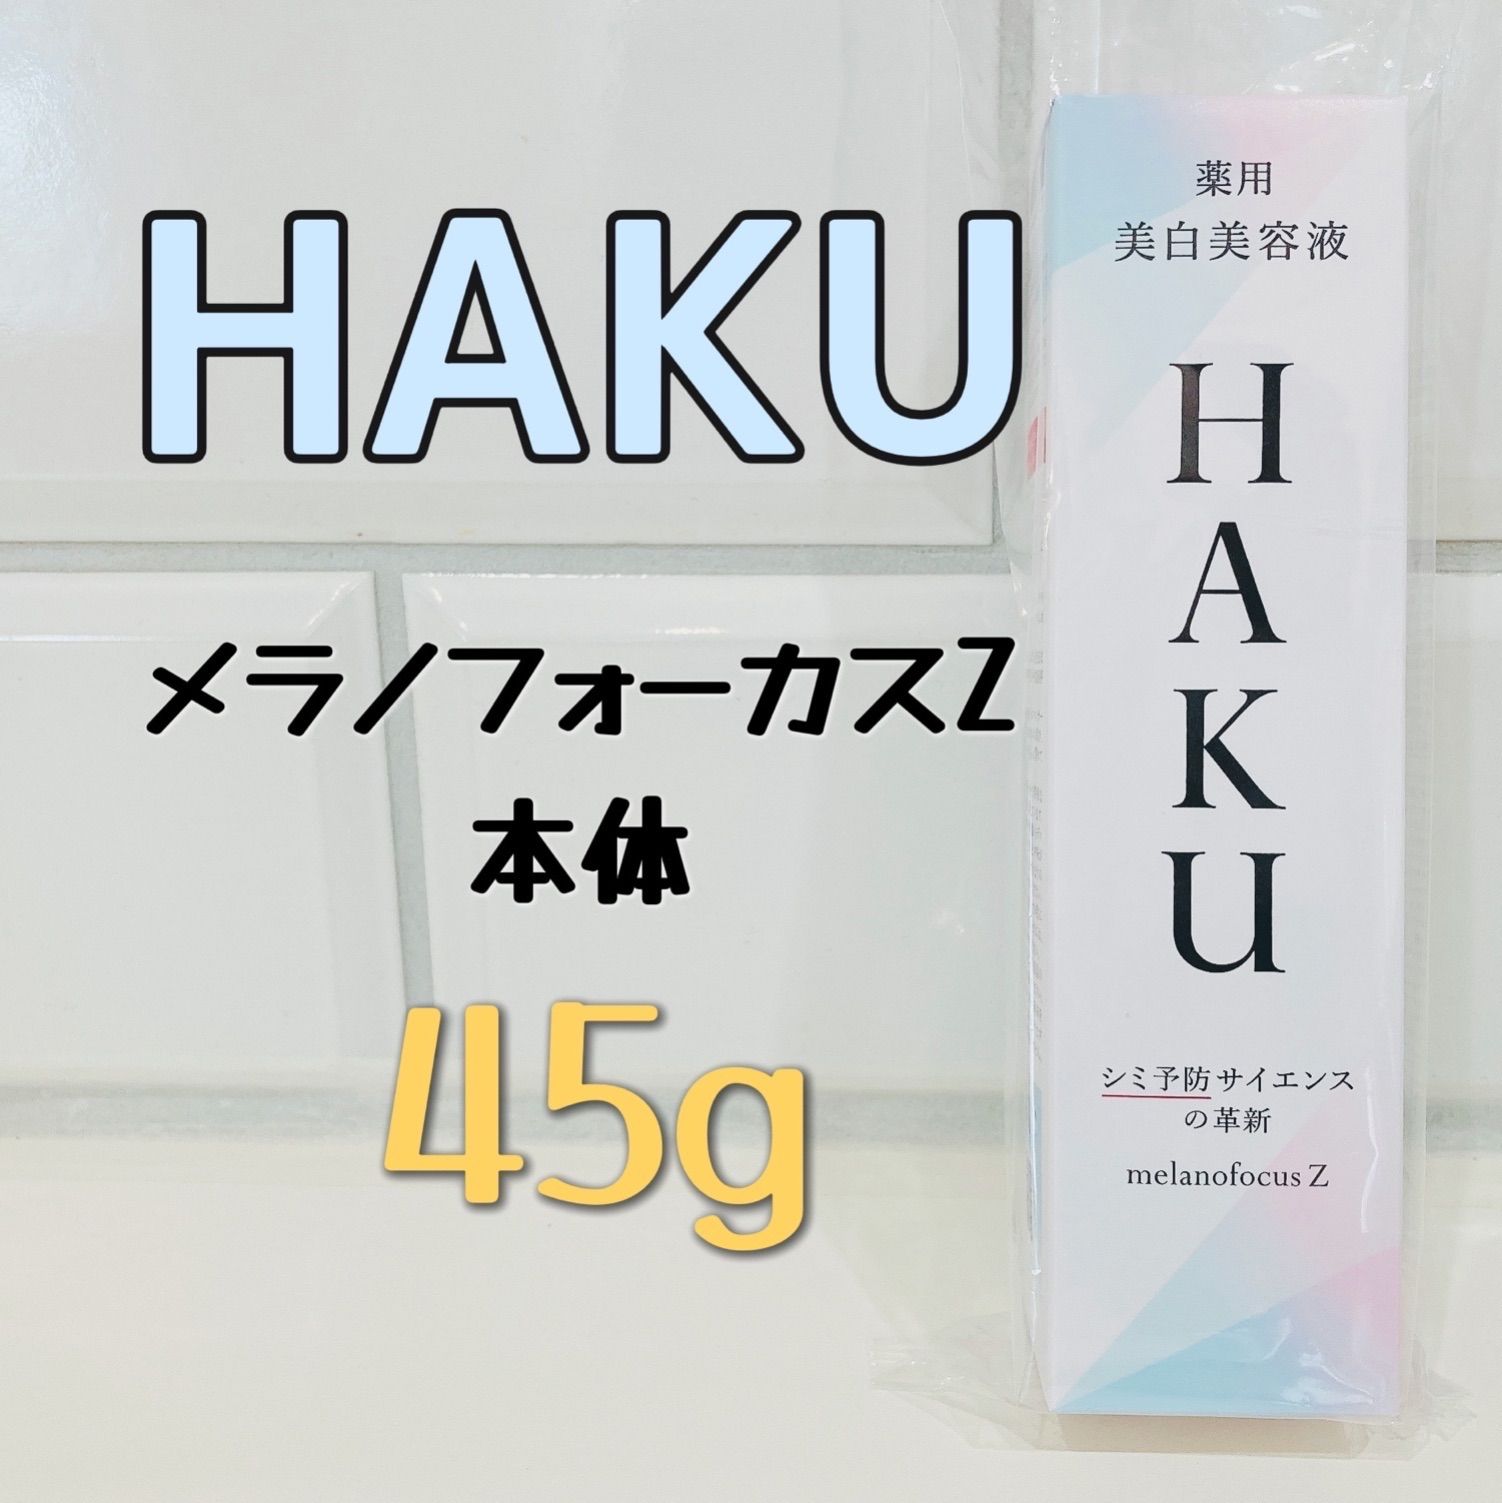 HAKU メラノフォーカスZ 薬用美白美容液 45g 本体 - mariko.shop - メルカリ